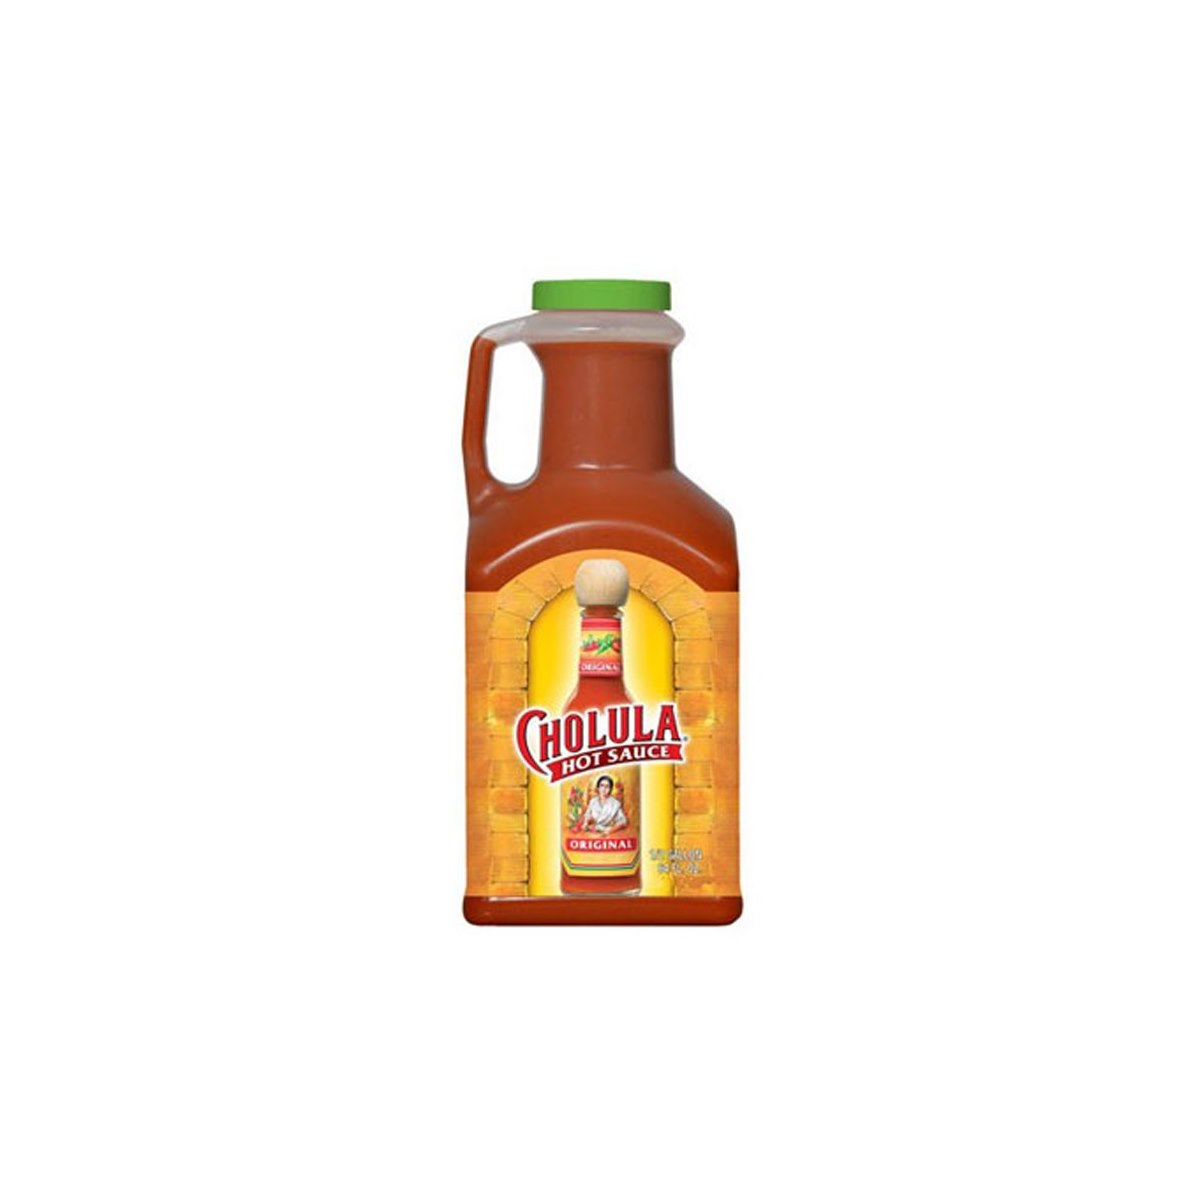 Original Cholula Hot Sauce Catering Size 1.89 Litre